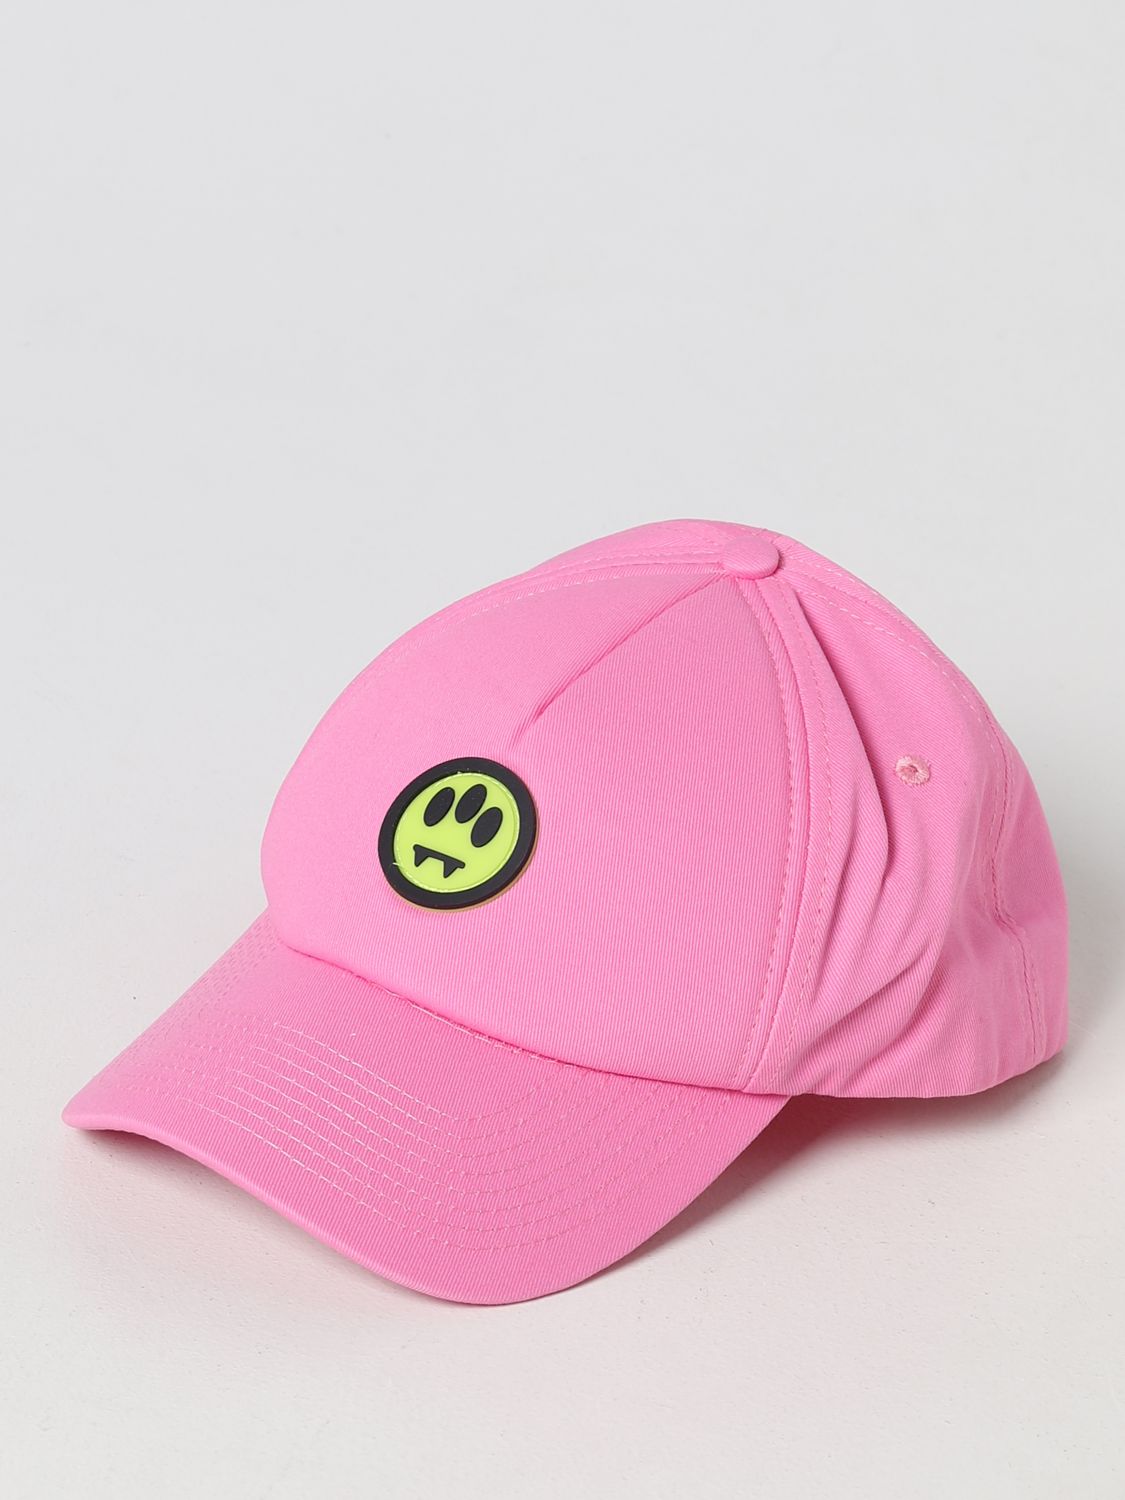 Hat Barrow: Barrow hat for men pink 1